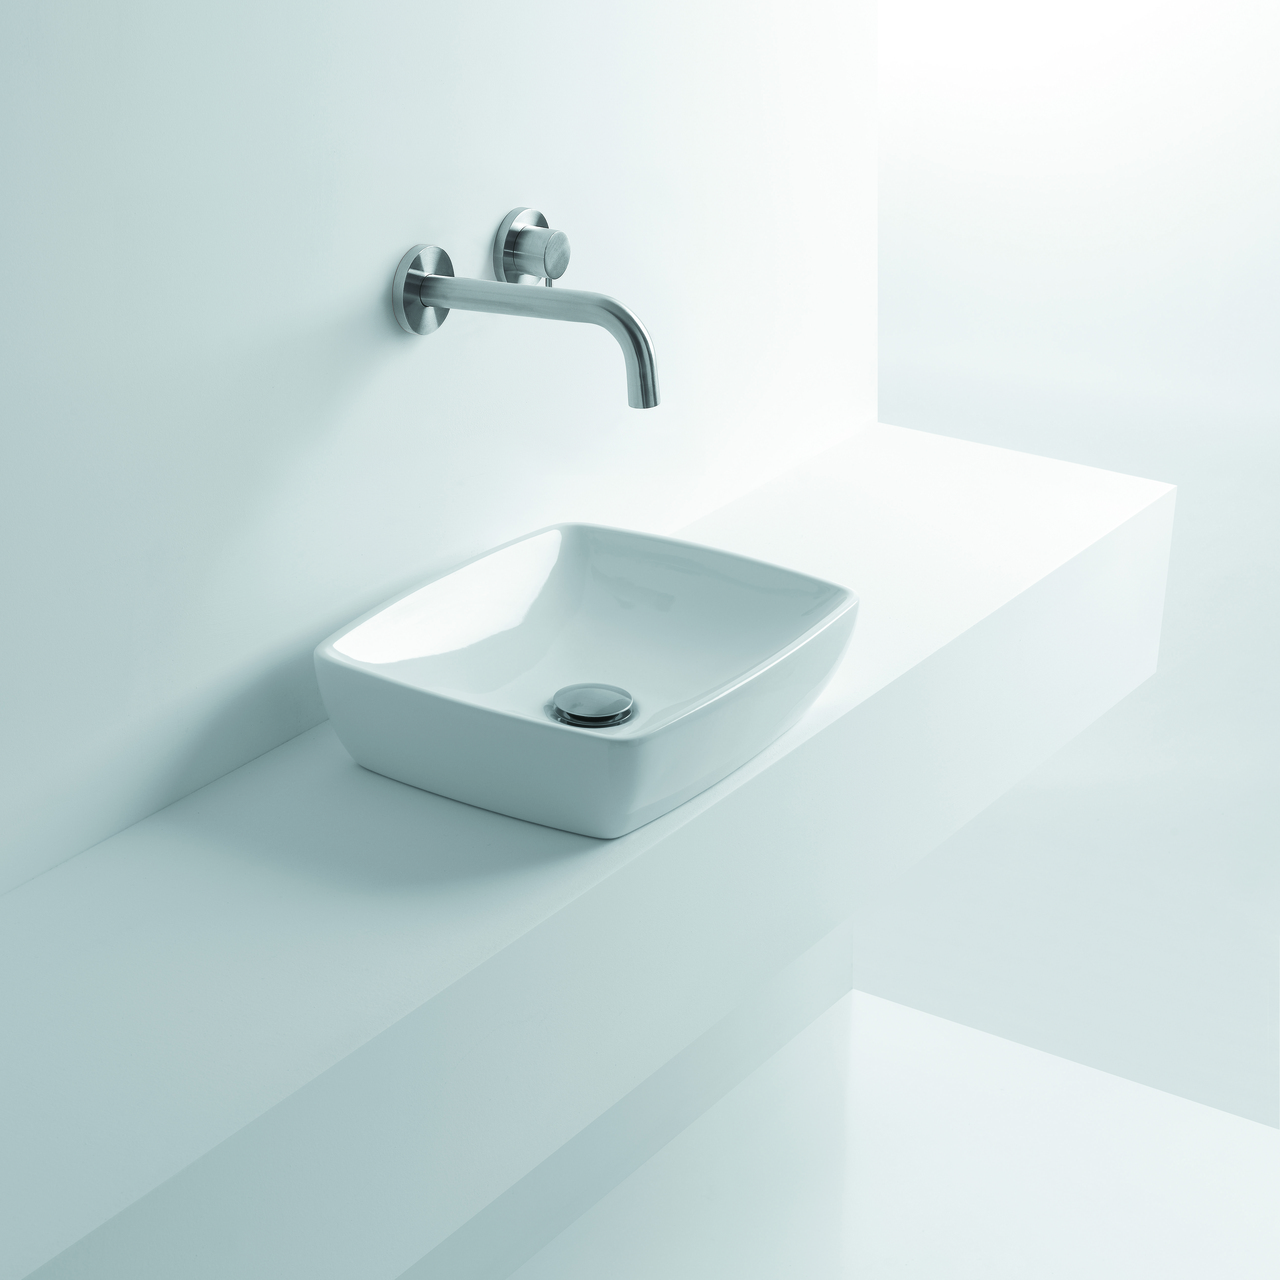 H10 40C,15.7 x 12.6 x 4.0, Countertop Bathroom Sink in Ceramic White